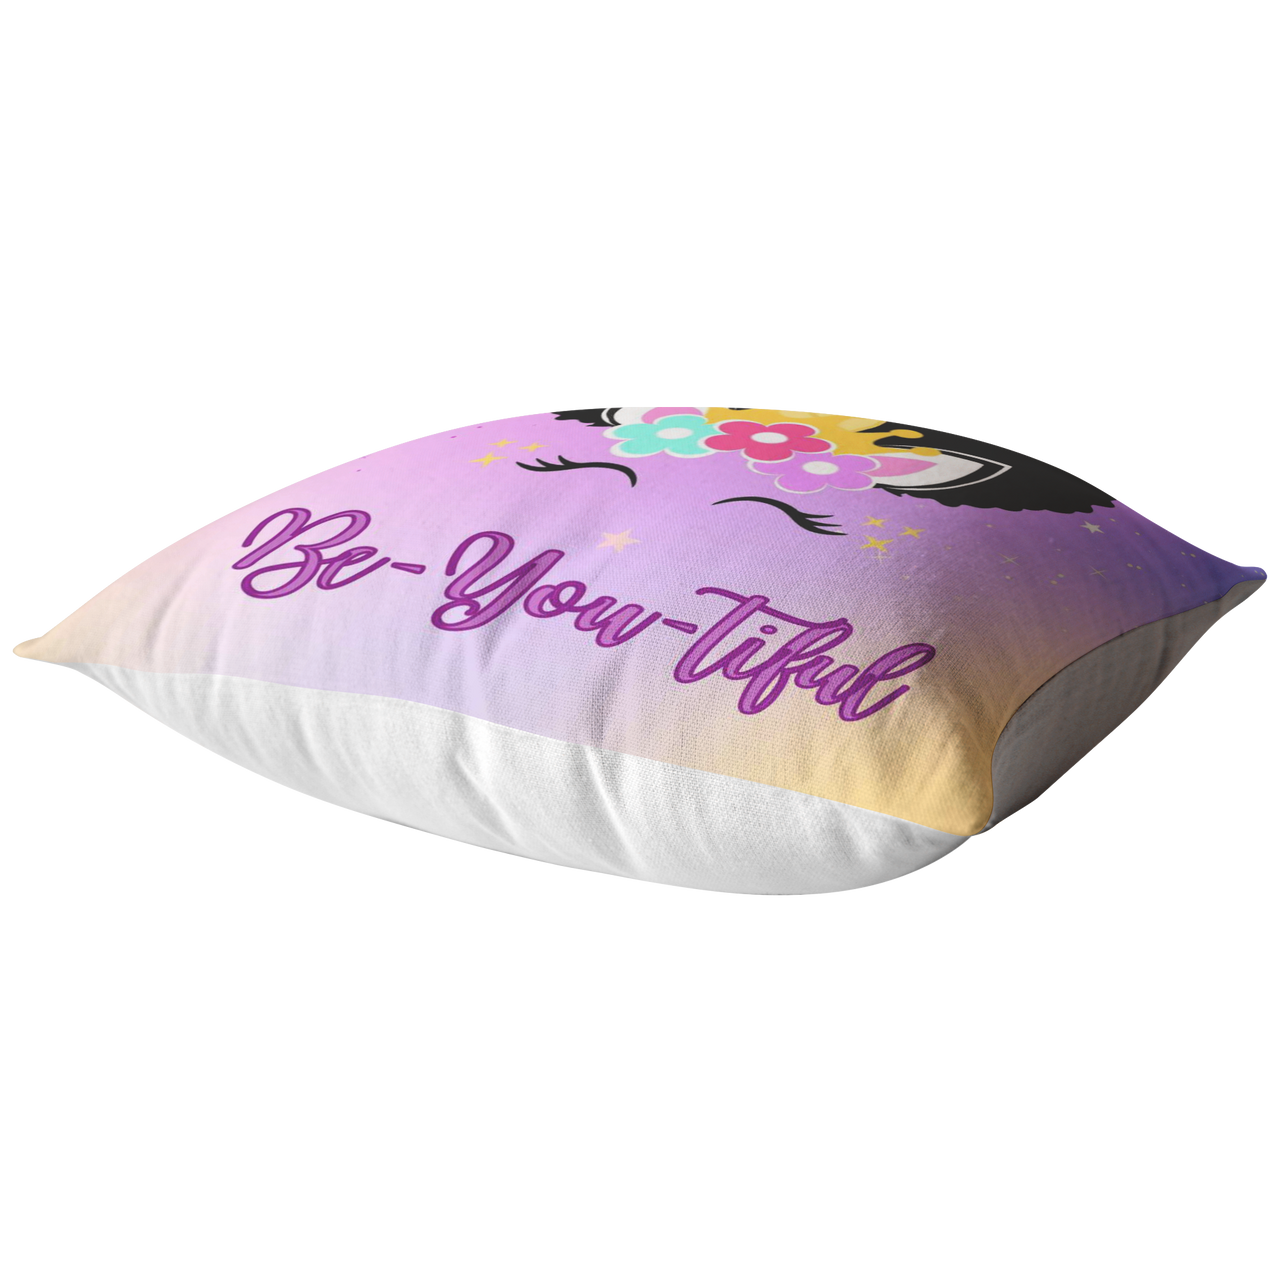 The Be-YOU-tiful Afro Puffs Unicorn Pillow